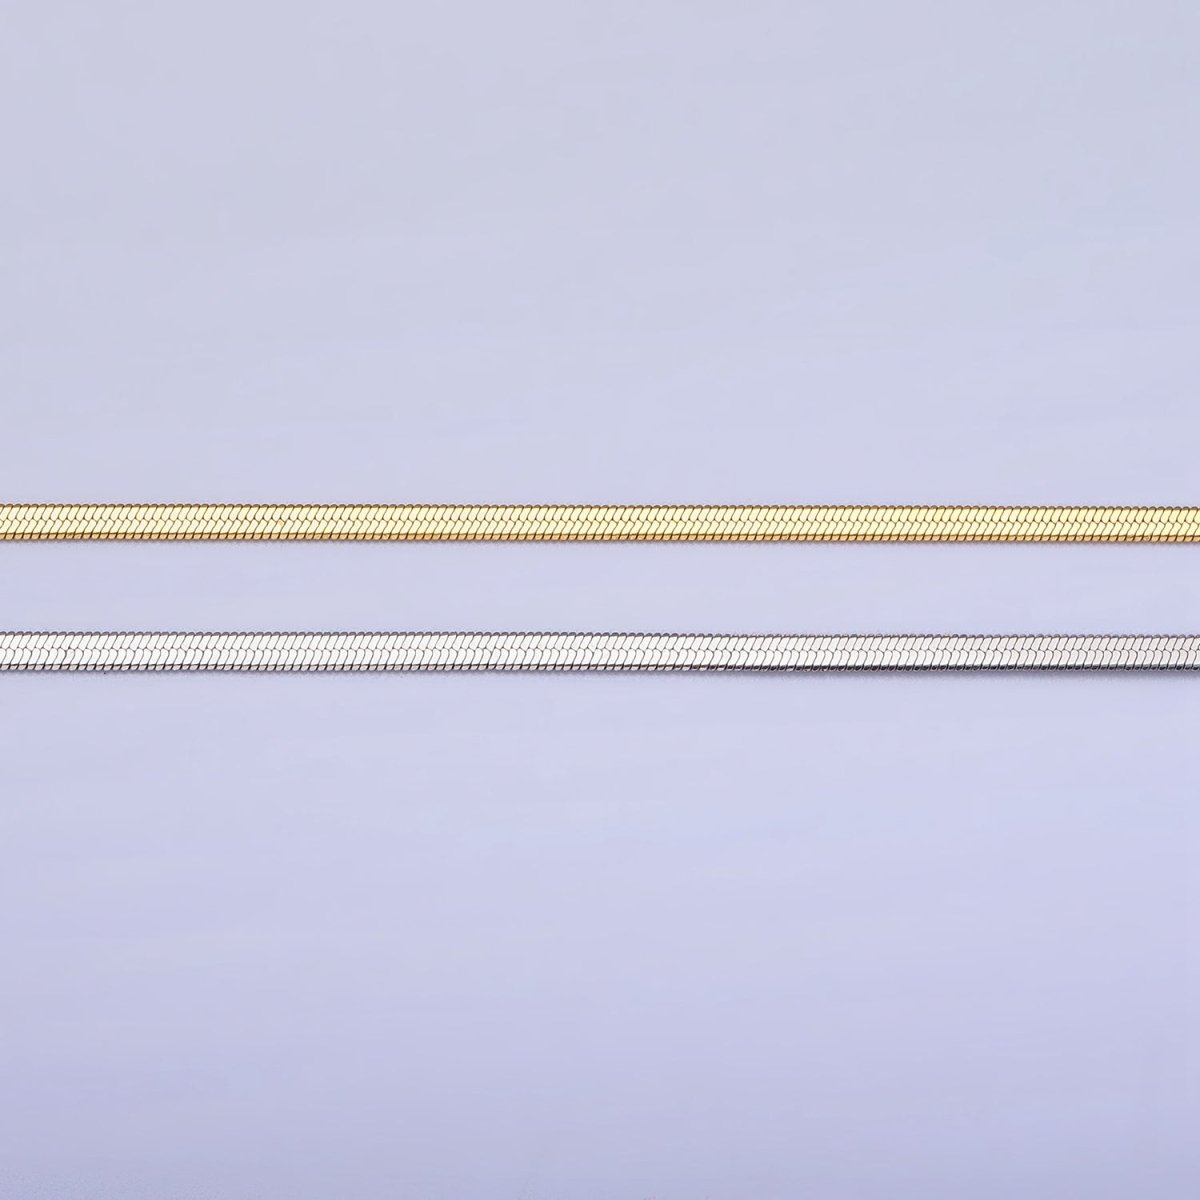 Dainty 2mm Gold Herringbone Chain Necklace Silver Flat Snake Chain Stainless Steel Chain 17.5 inch | WA-1550 WA-1551 - DLUXCA